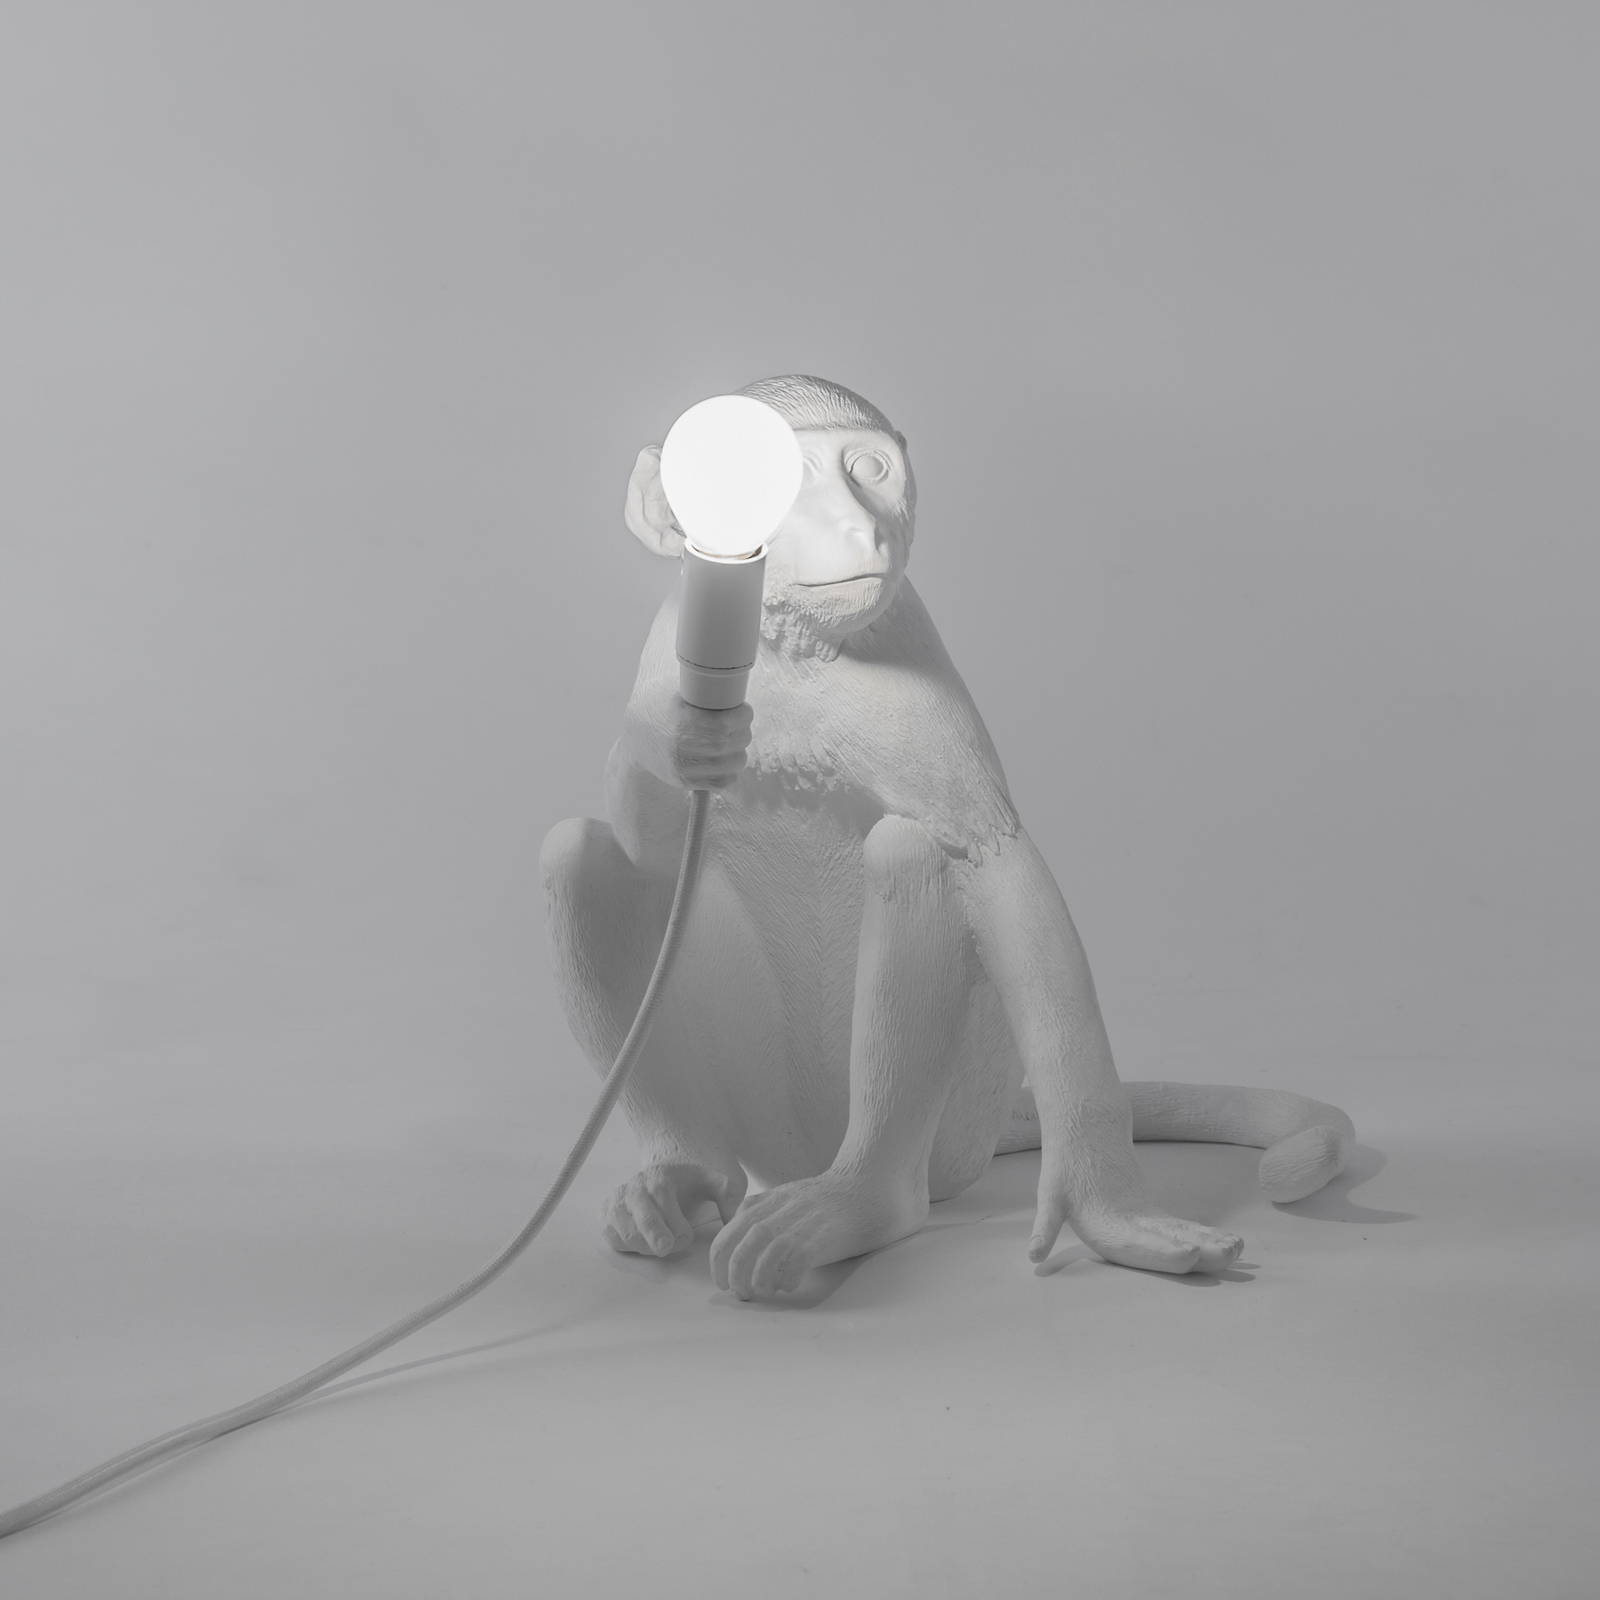 LED decoratie-tafellamp Monkey Lamp, wit, zittend